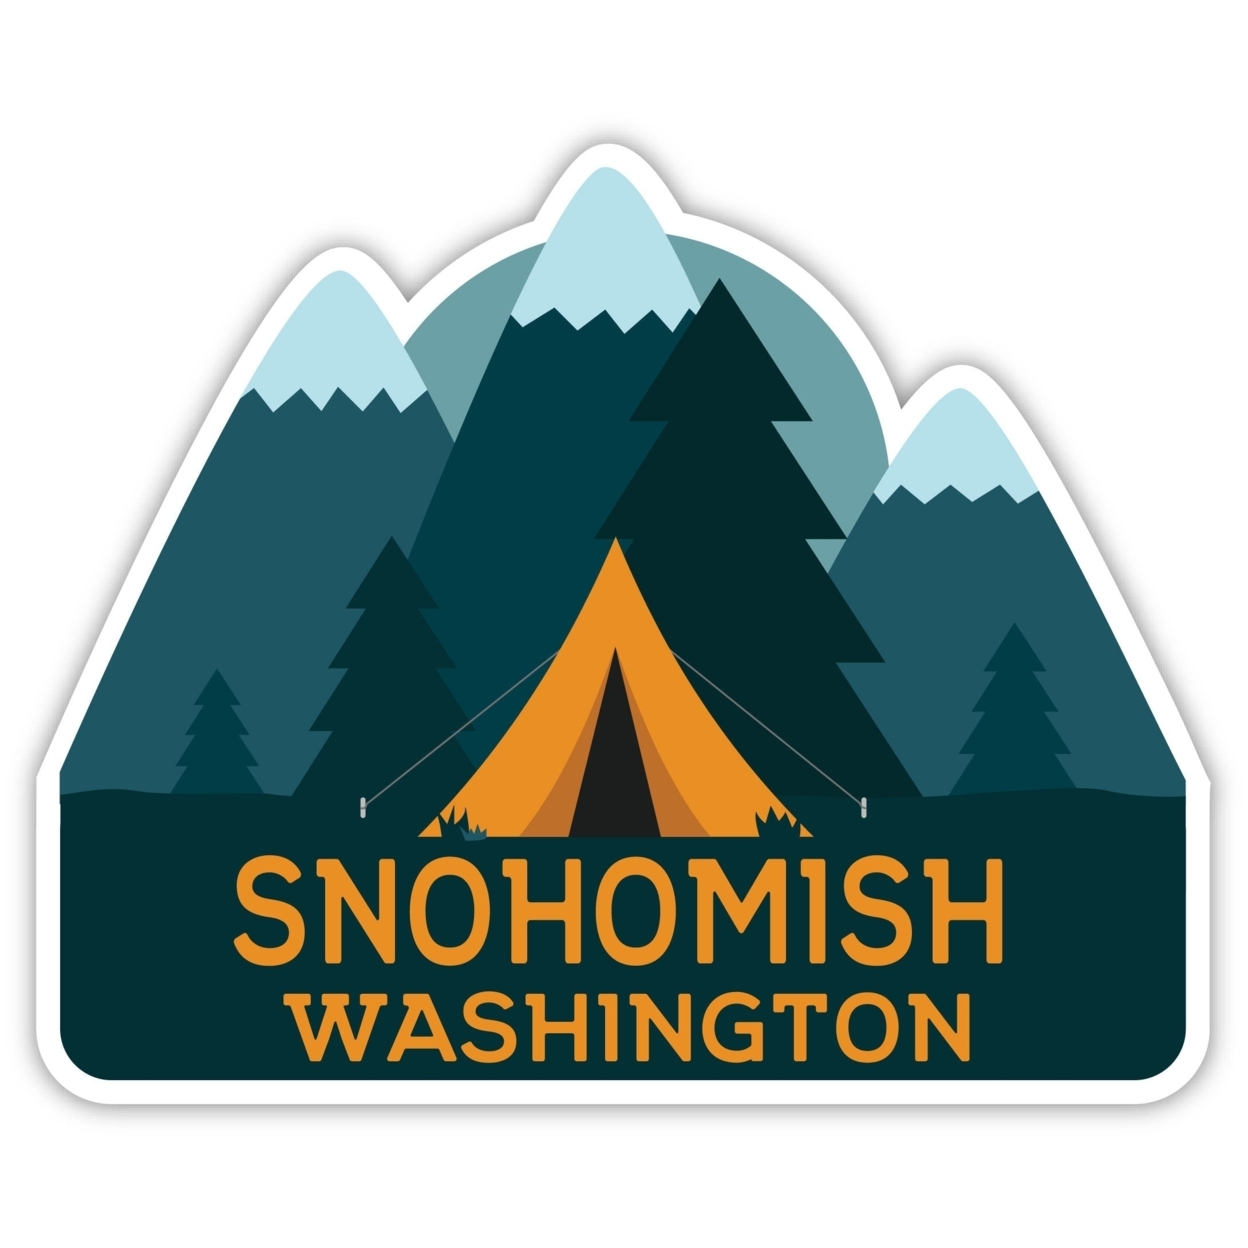 Snohomish Washington Souvenir Decorative Stickers (Choose Theme And Size) - Single Unit, 4-Inch, Camp Life